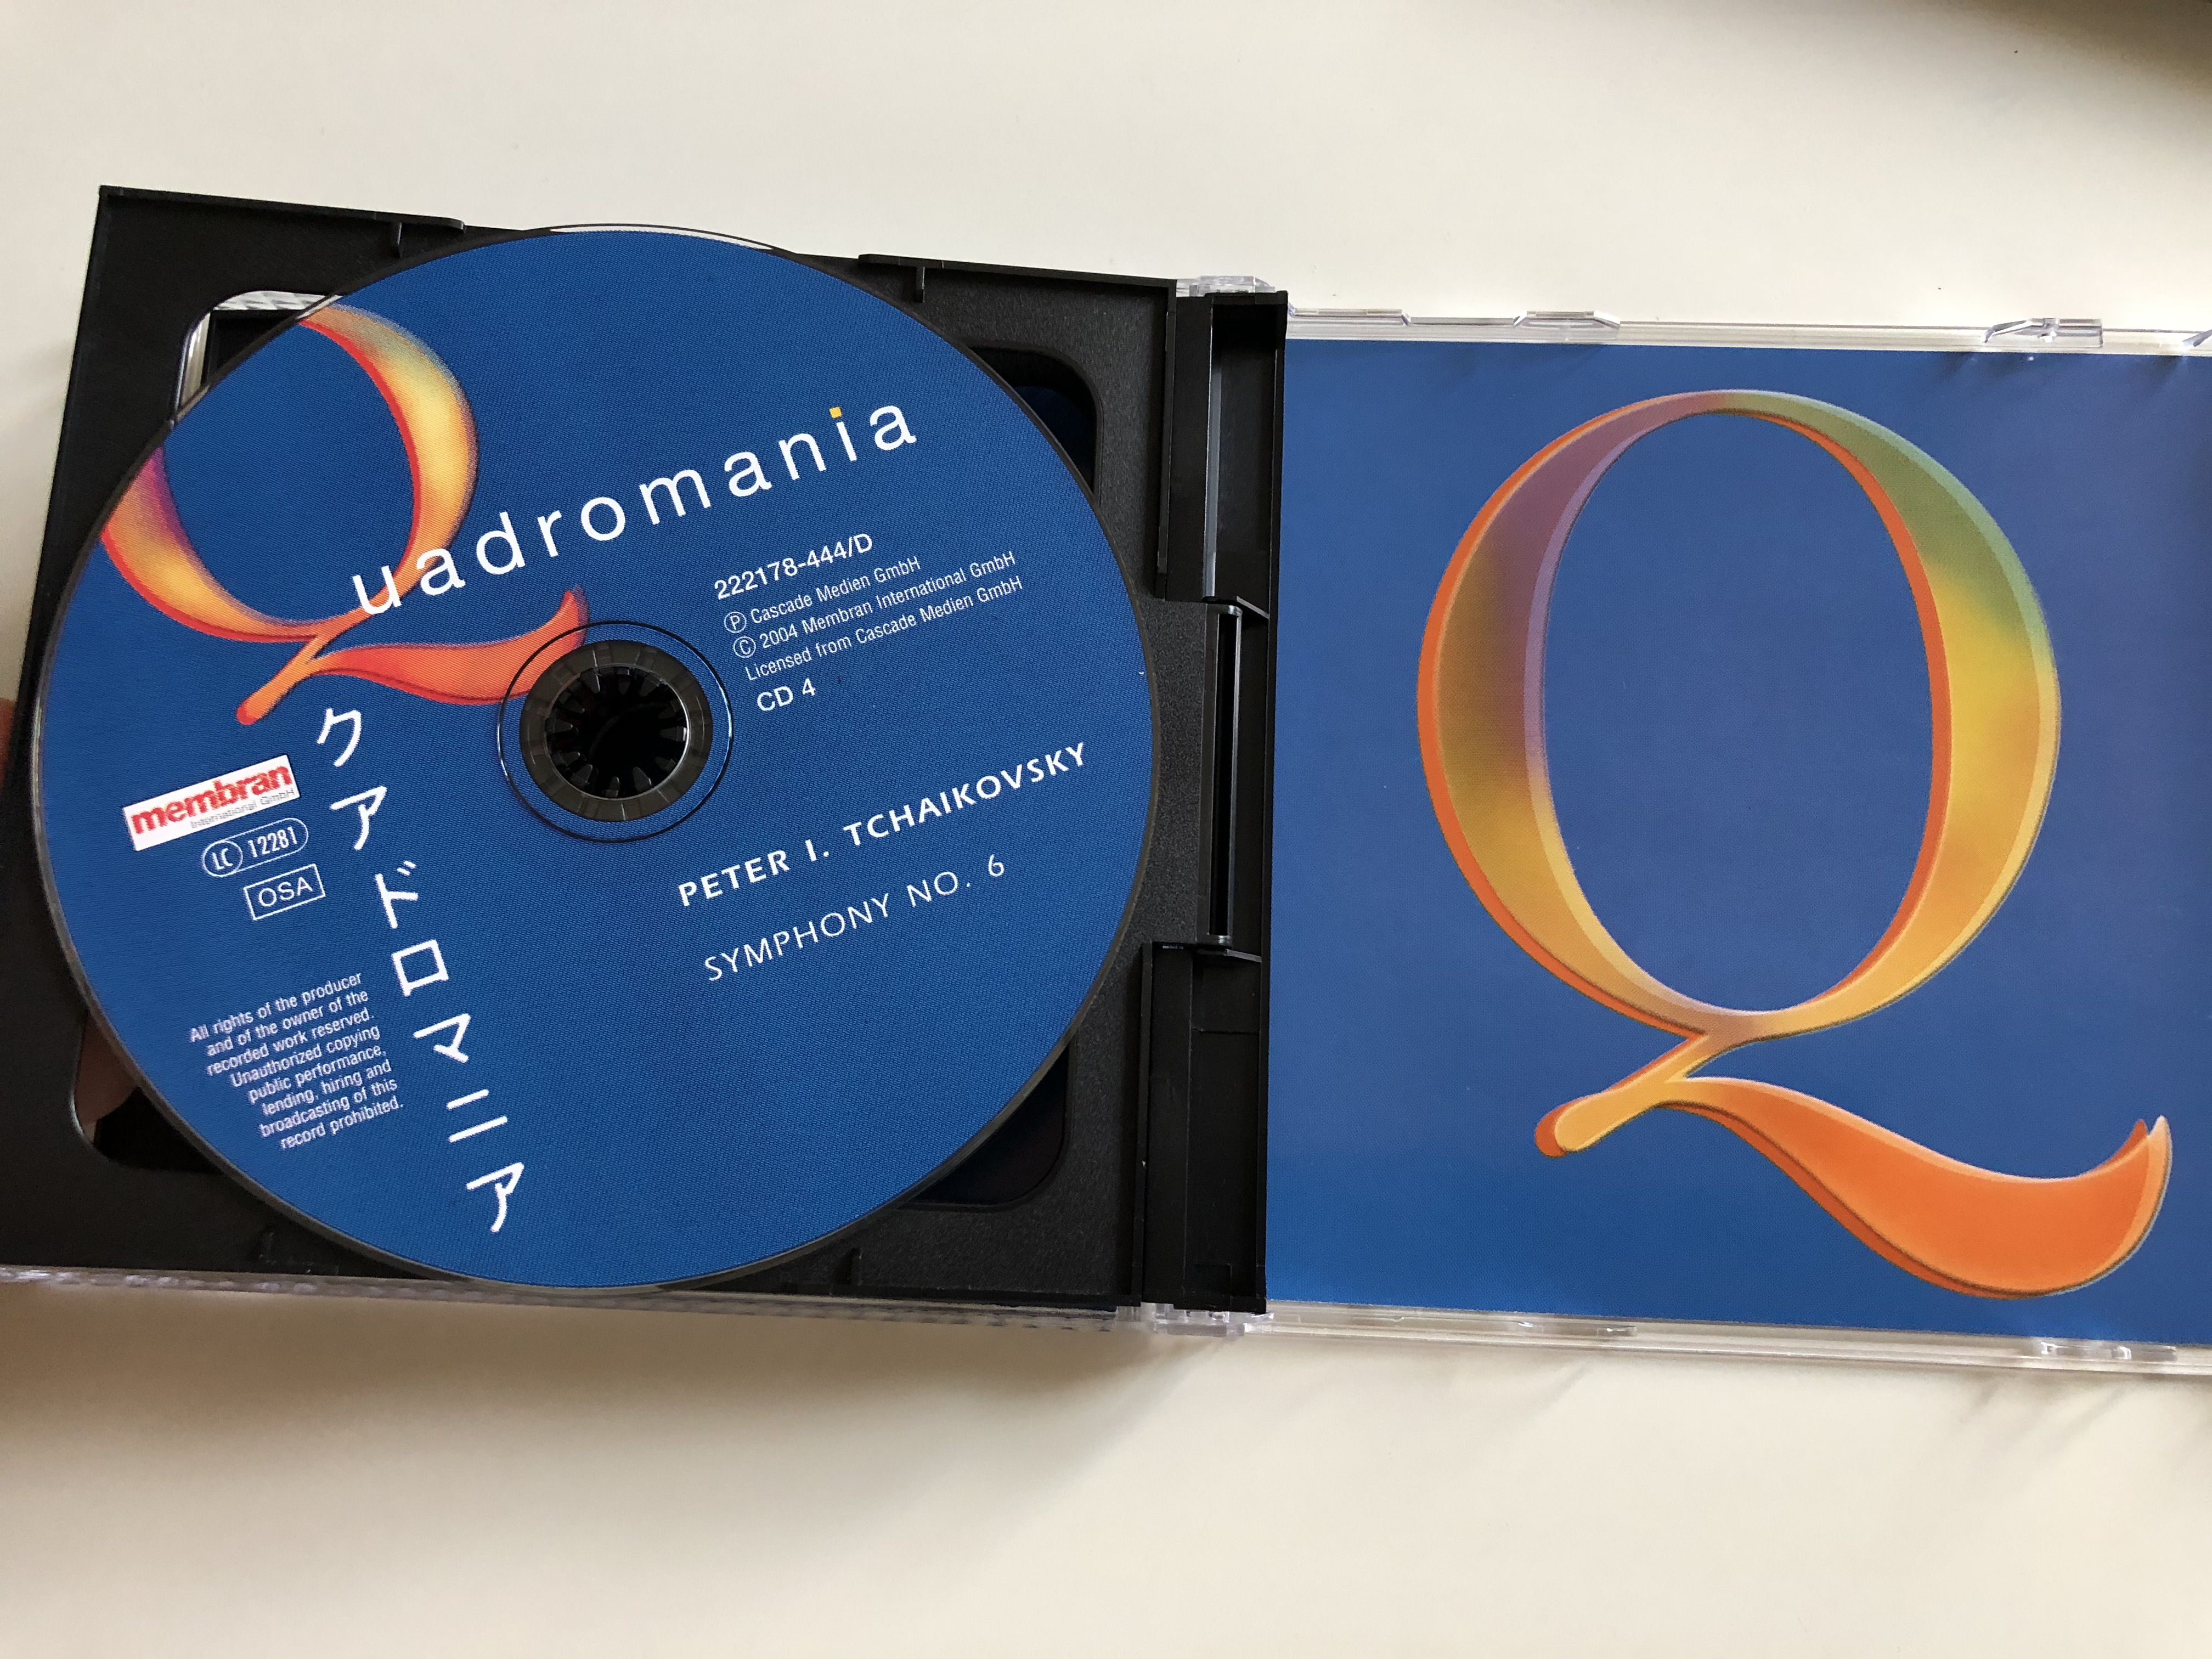 quadromania-4-peter-i.-tchaikovsky-symphonies-nos.-2-4-6-quadromania-4x-audio-cd-2004-222178-444-8-.jpg